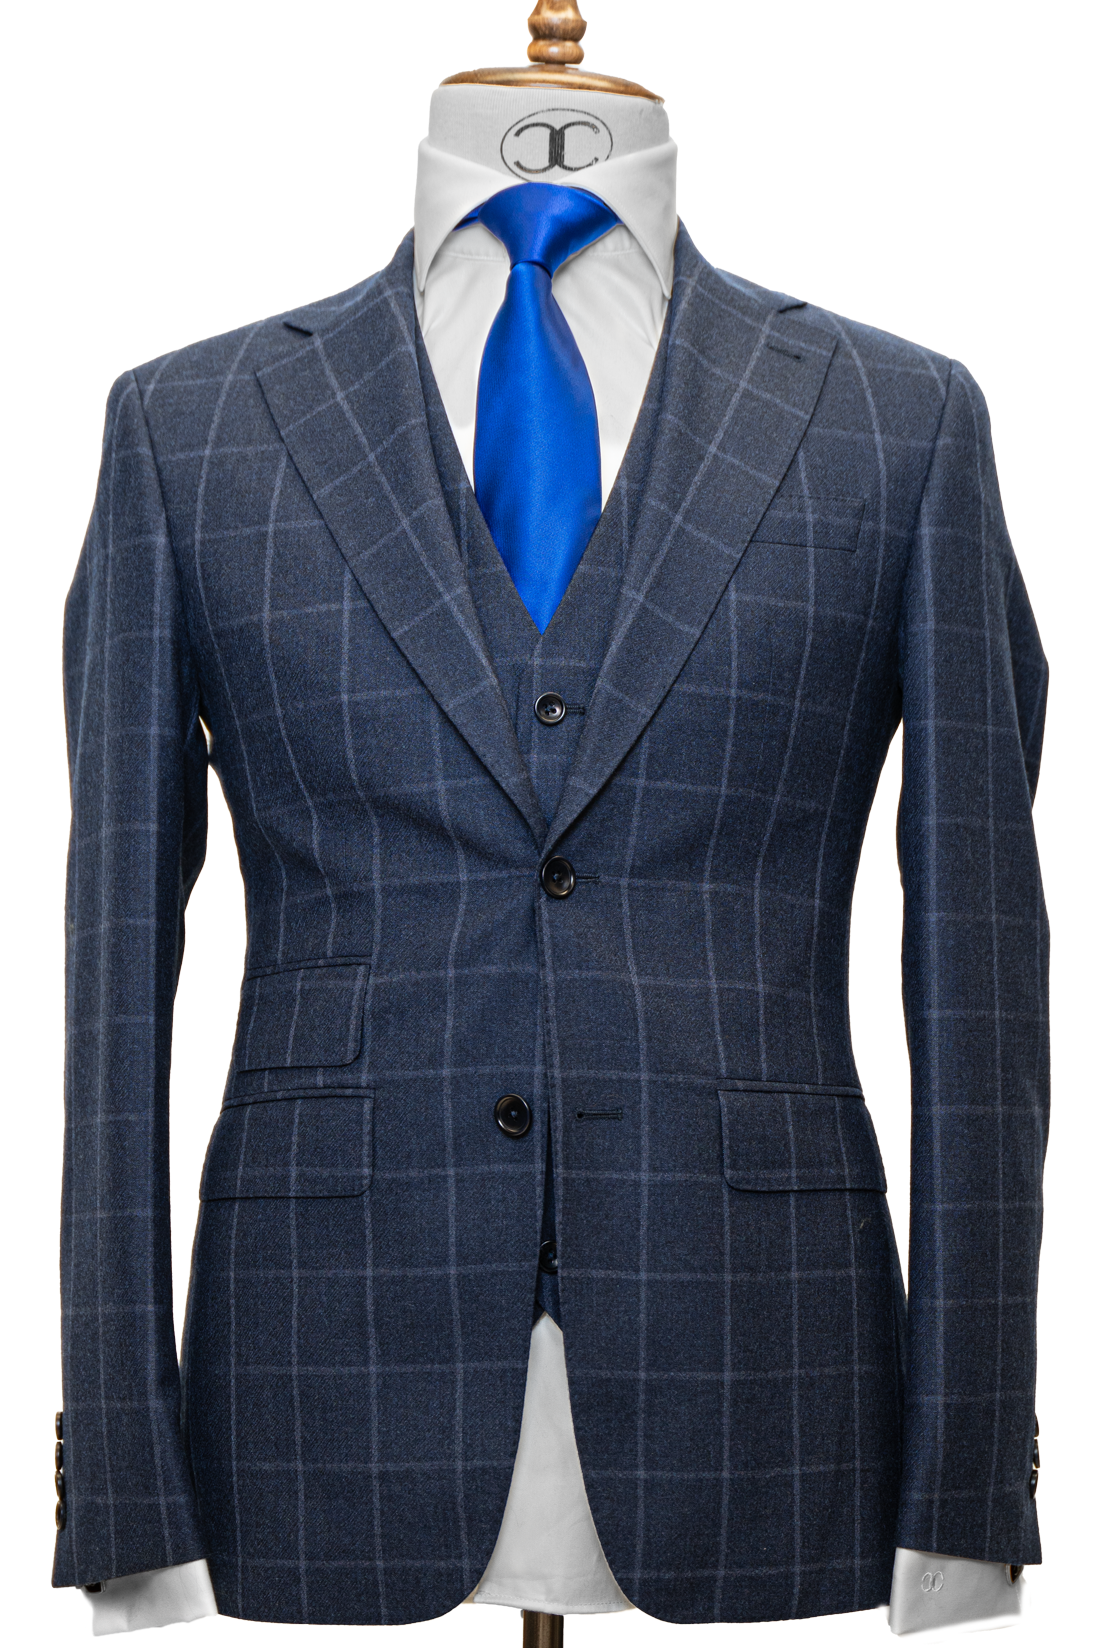 Zignone - Navy Blue with Light Blue windowpane cashmere 3-Piece slim fit suit